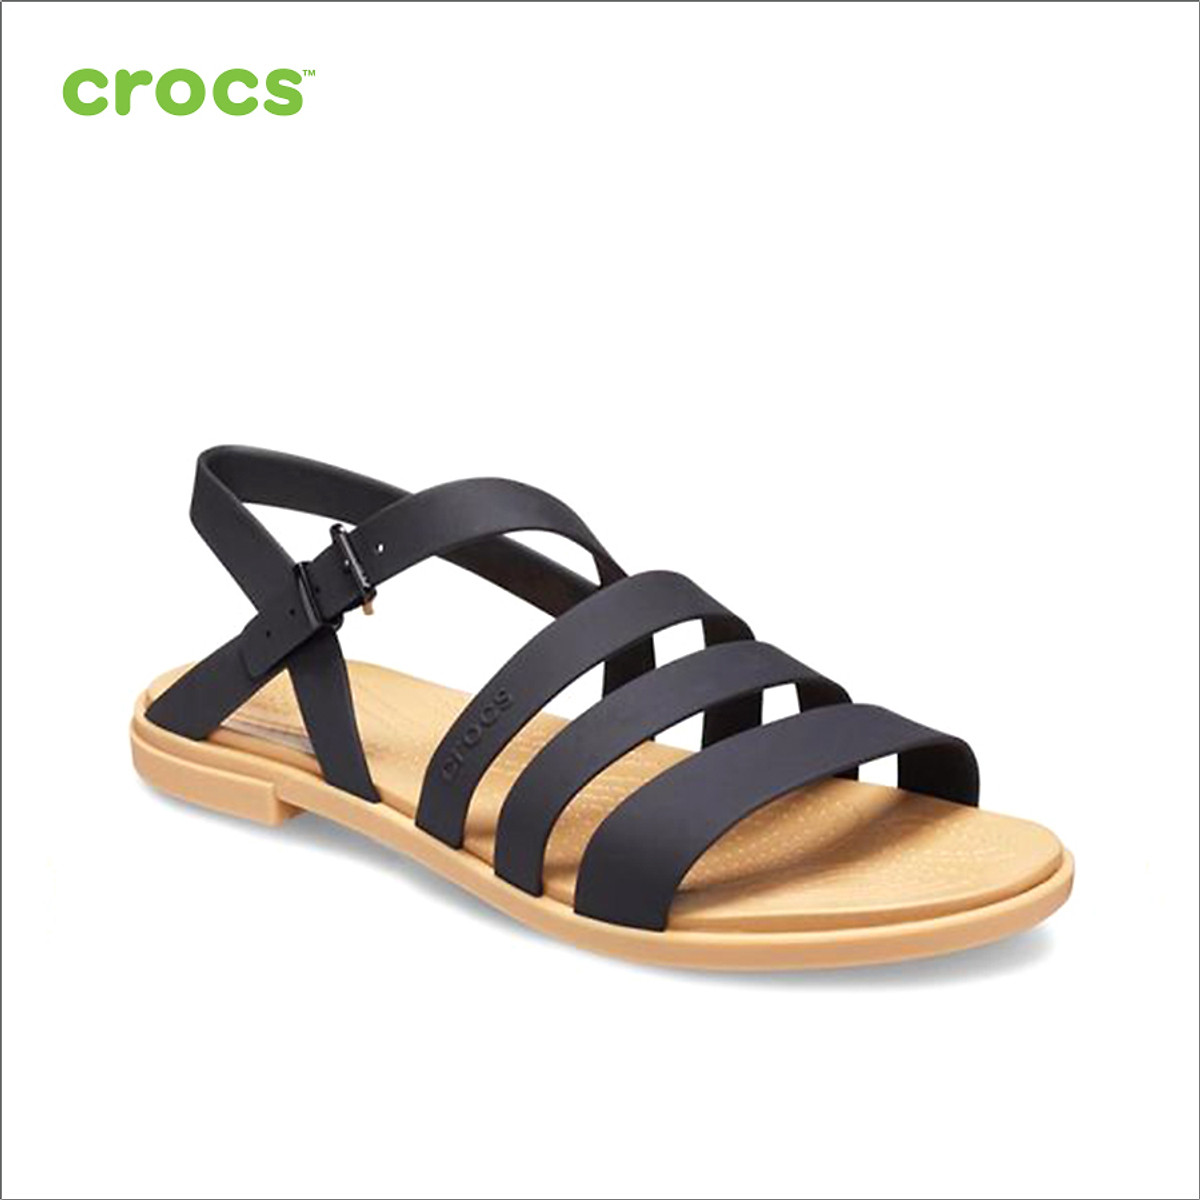 Mua Sandal Nữ Crocs - Tulum - 206107-00W size W8 tại Supersports Vietnam